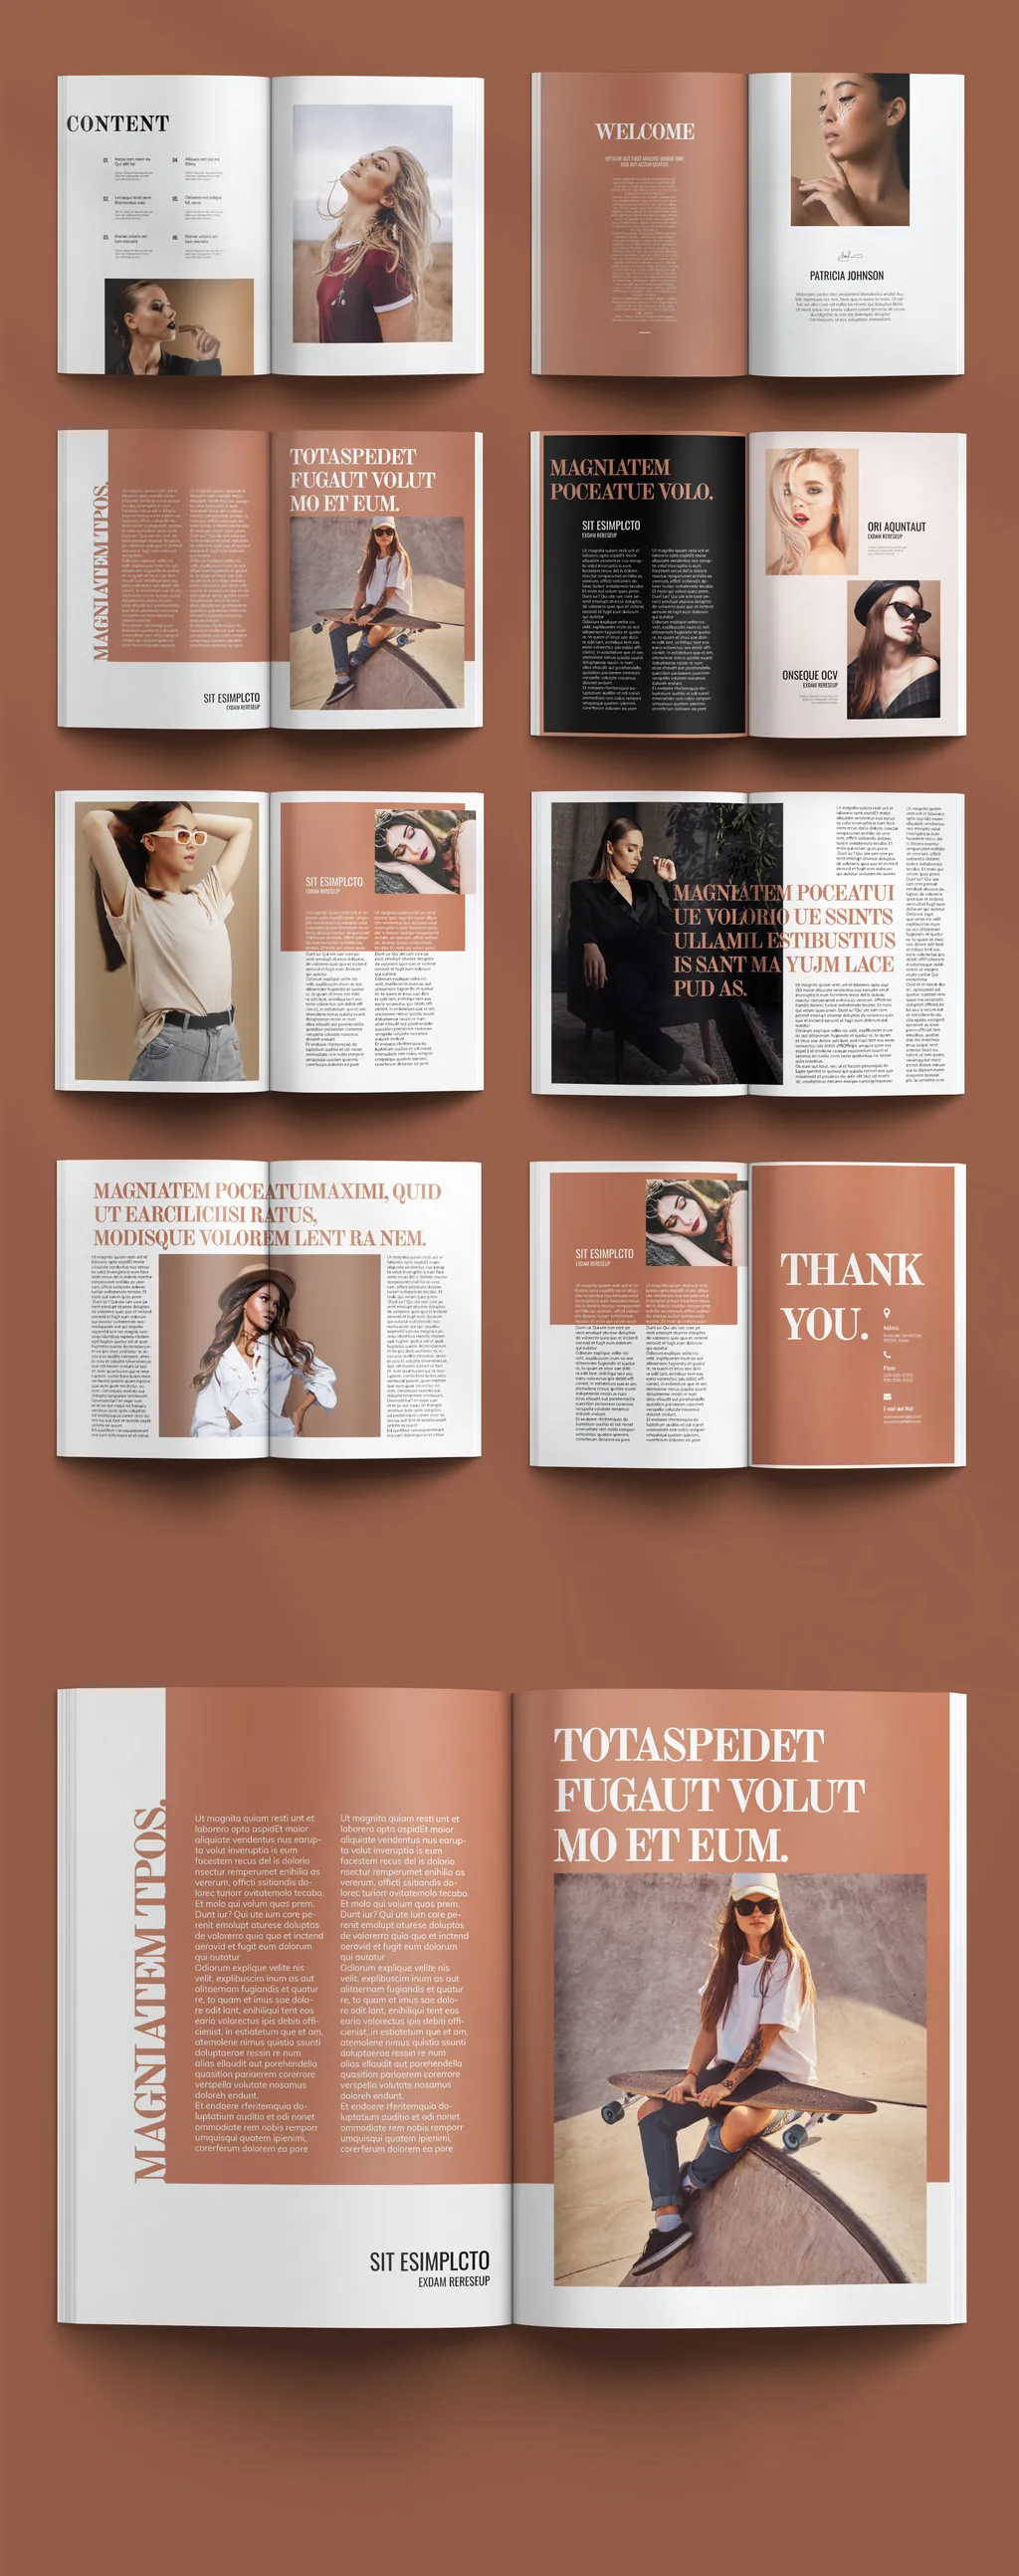 Adobestock - Magazine Layout 714758430